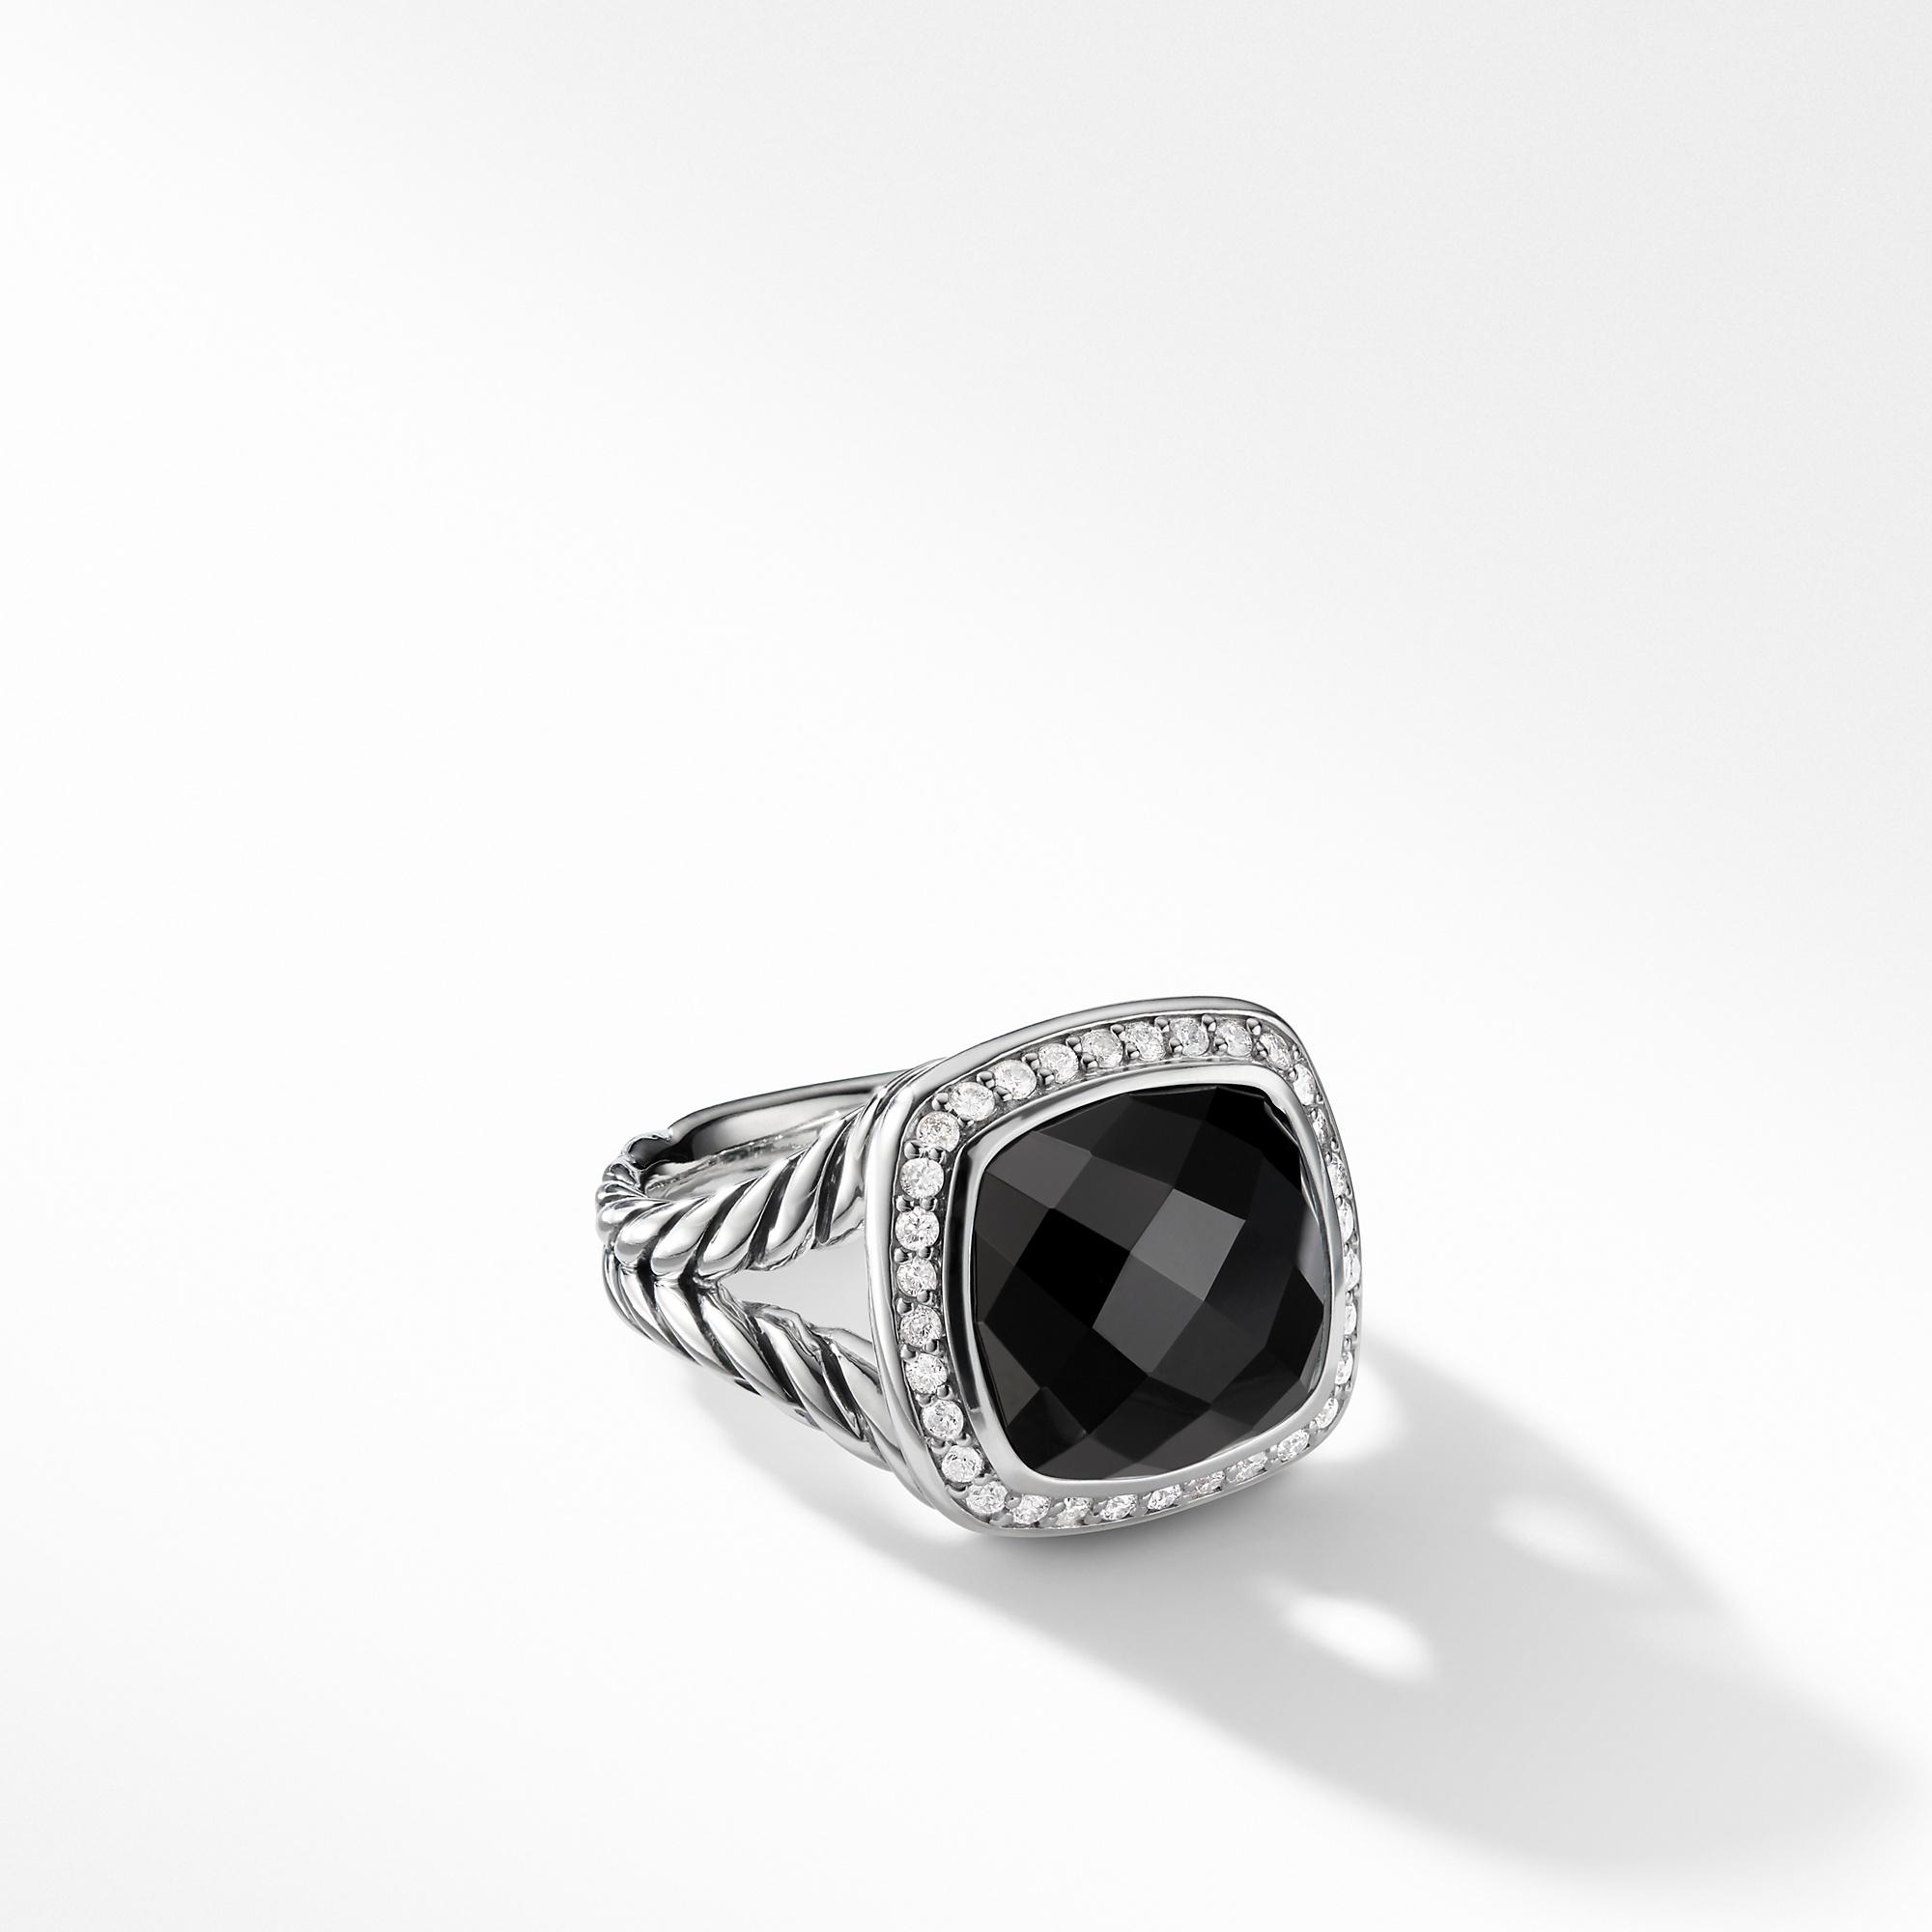 David Yurman Albion Ring with Black Onyx and Diamonds, size 6